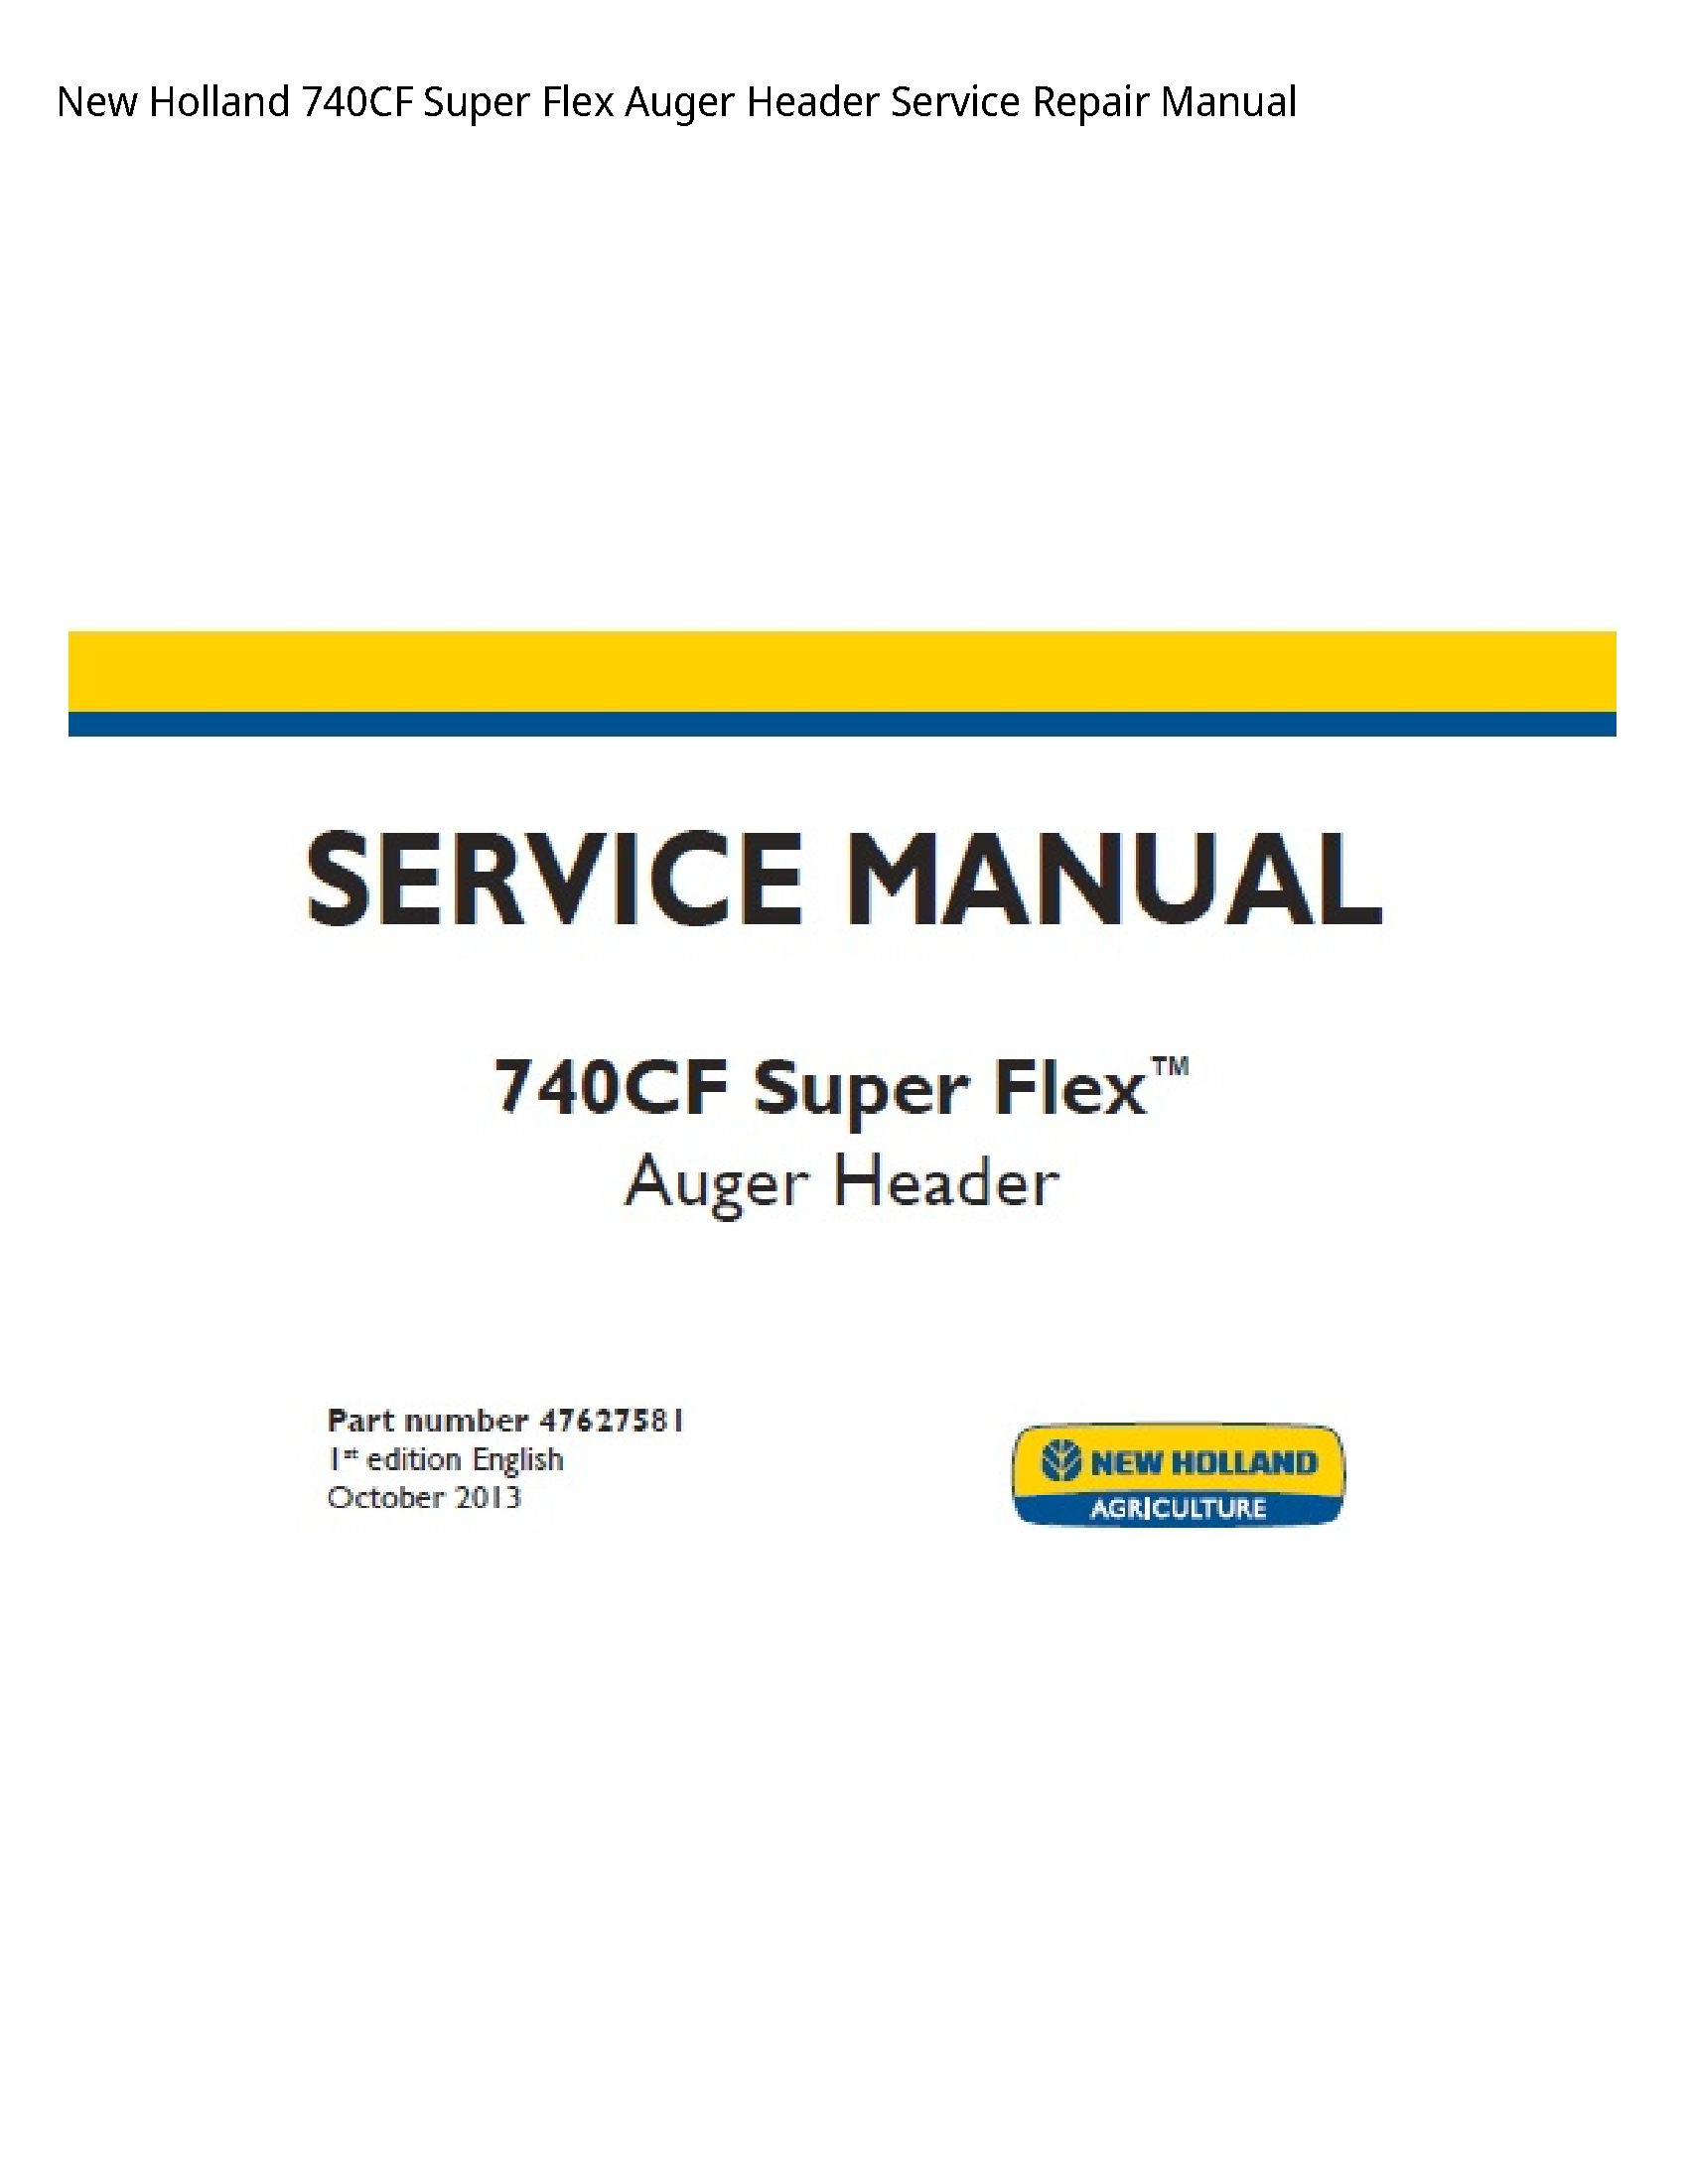 New Holland 740CF Super Flex Auger Header manual